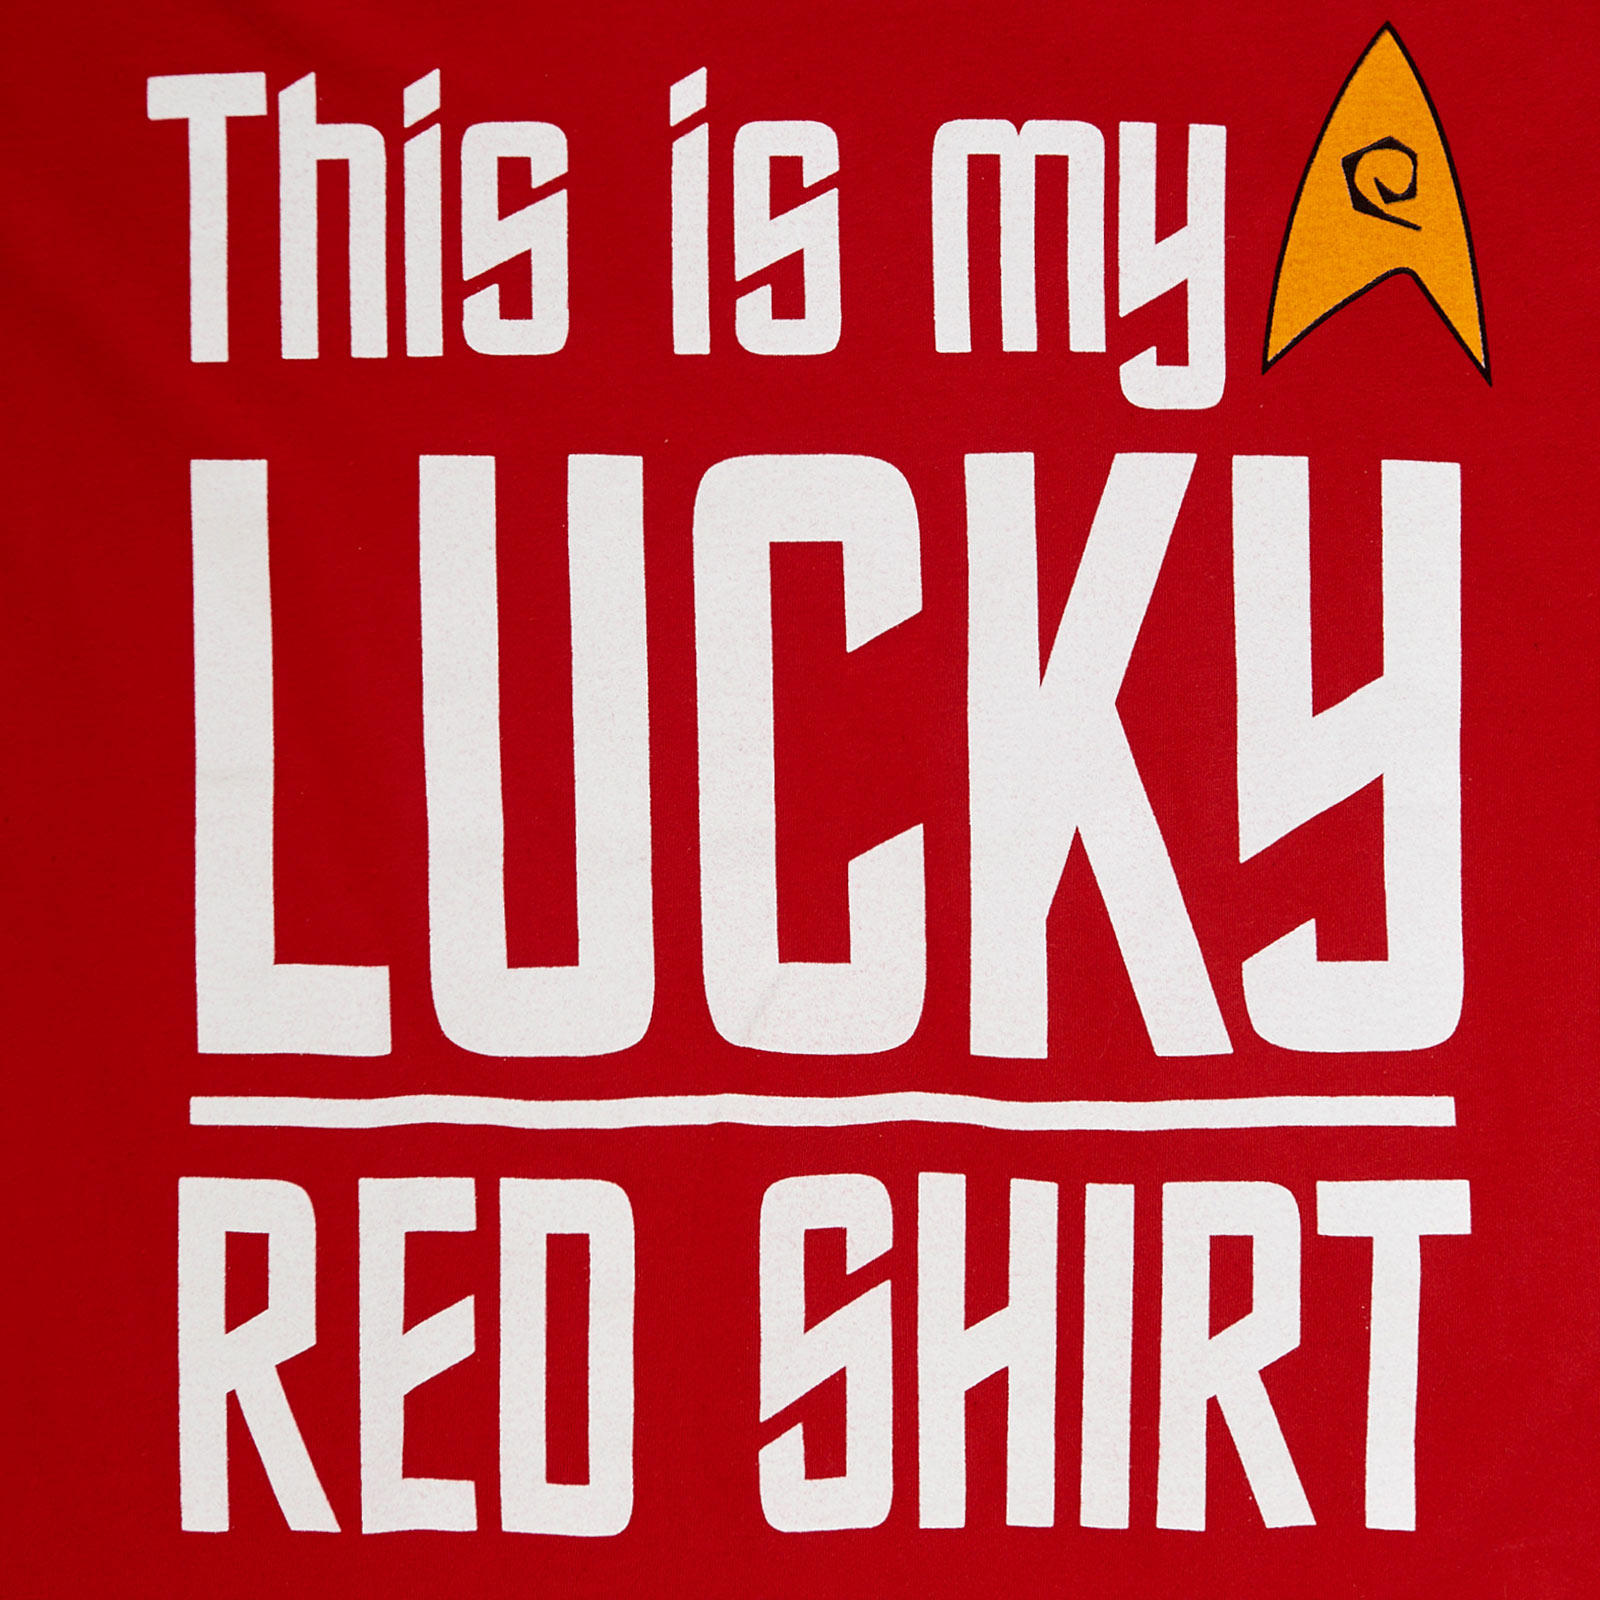 Star Trek - Mon T-shirt rouge porte-bonheur rouge